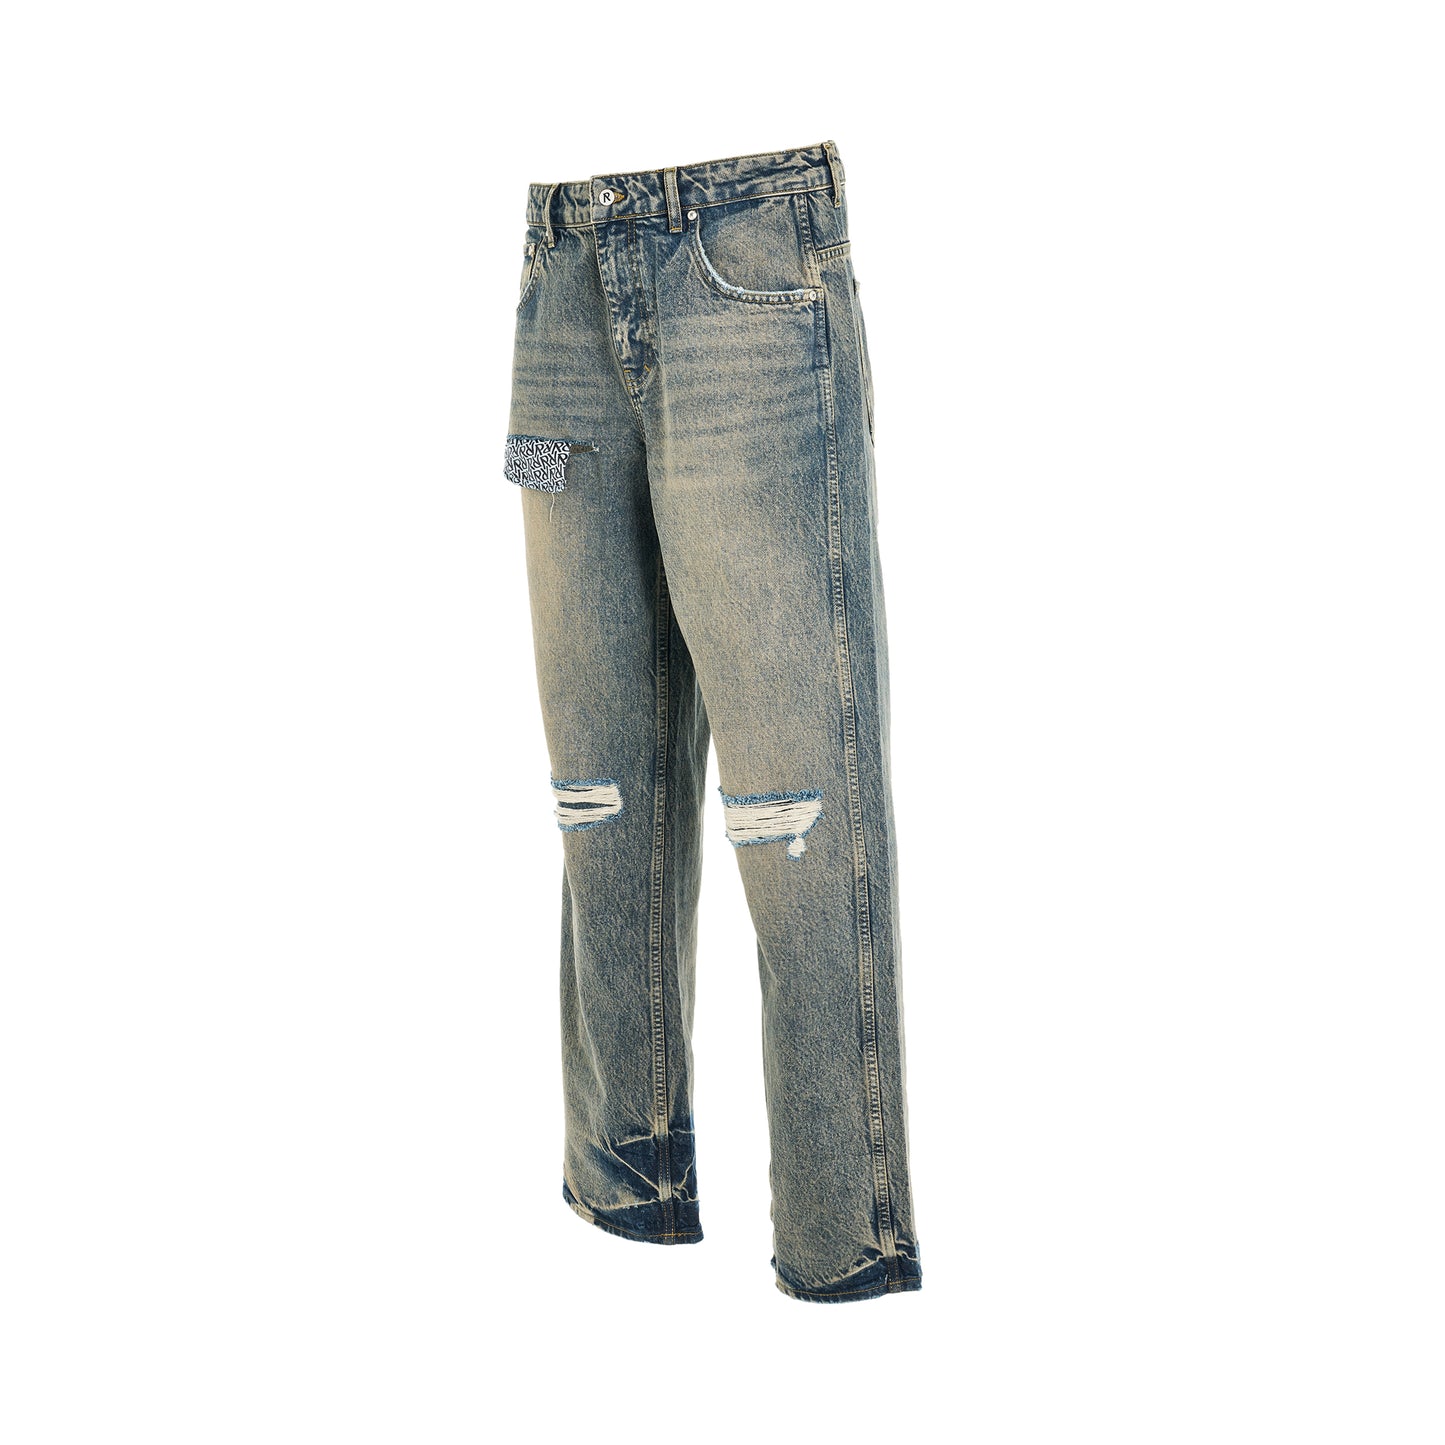 R3D Destroyer Baggy Denim Jeans in Blue Cream